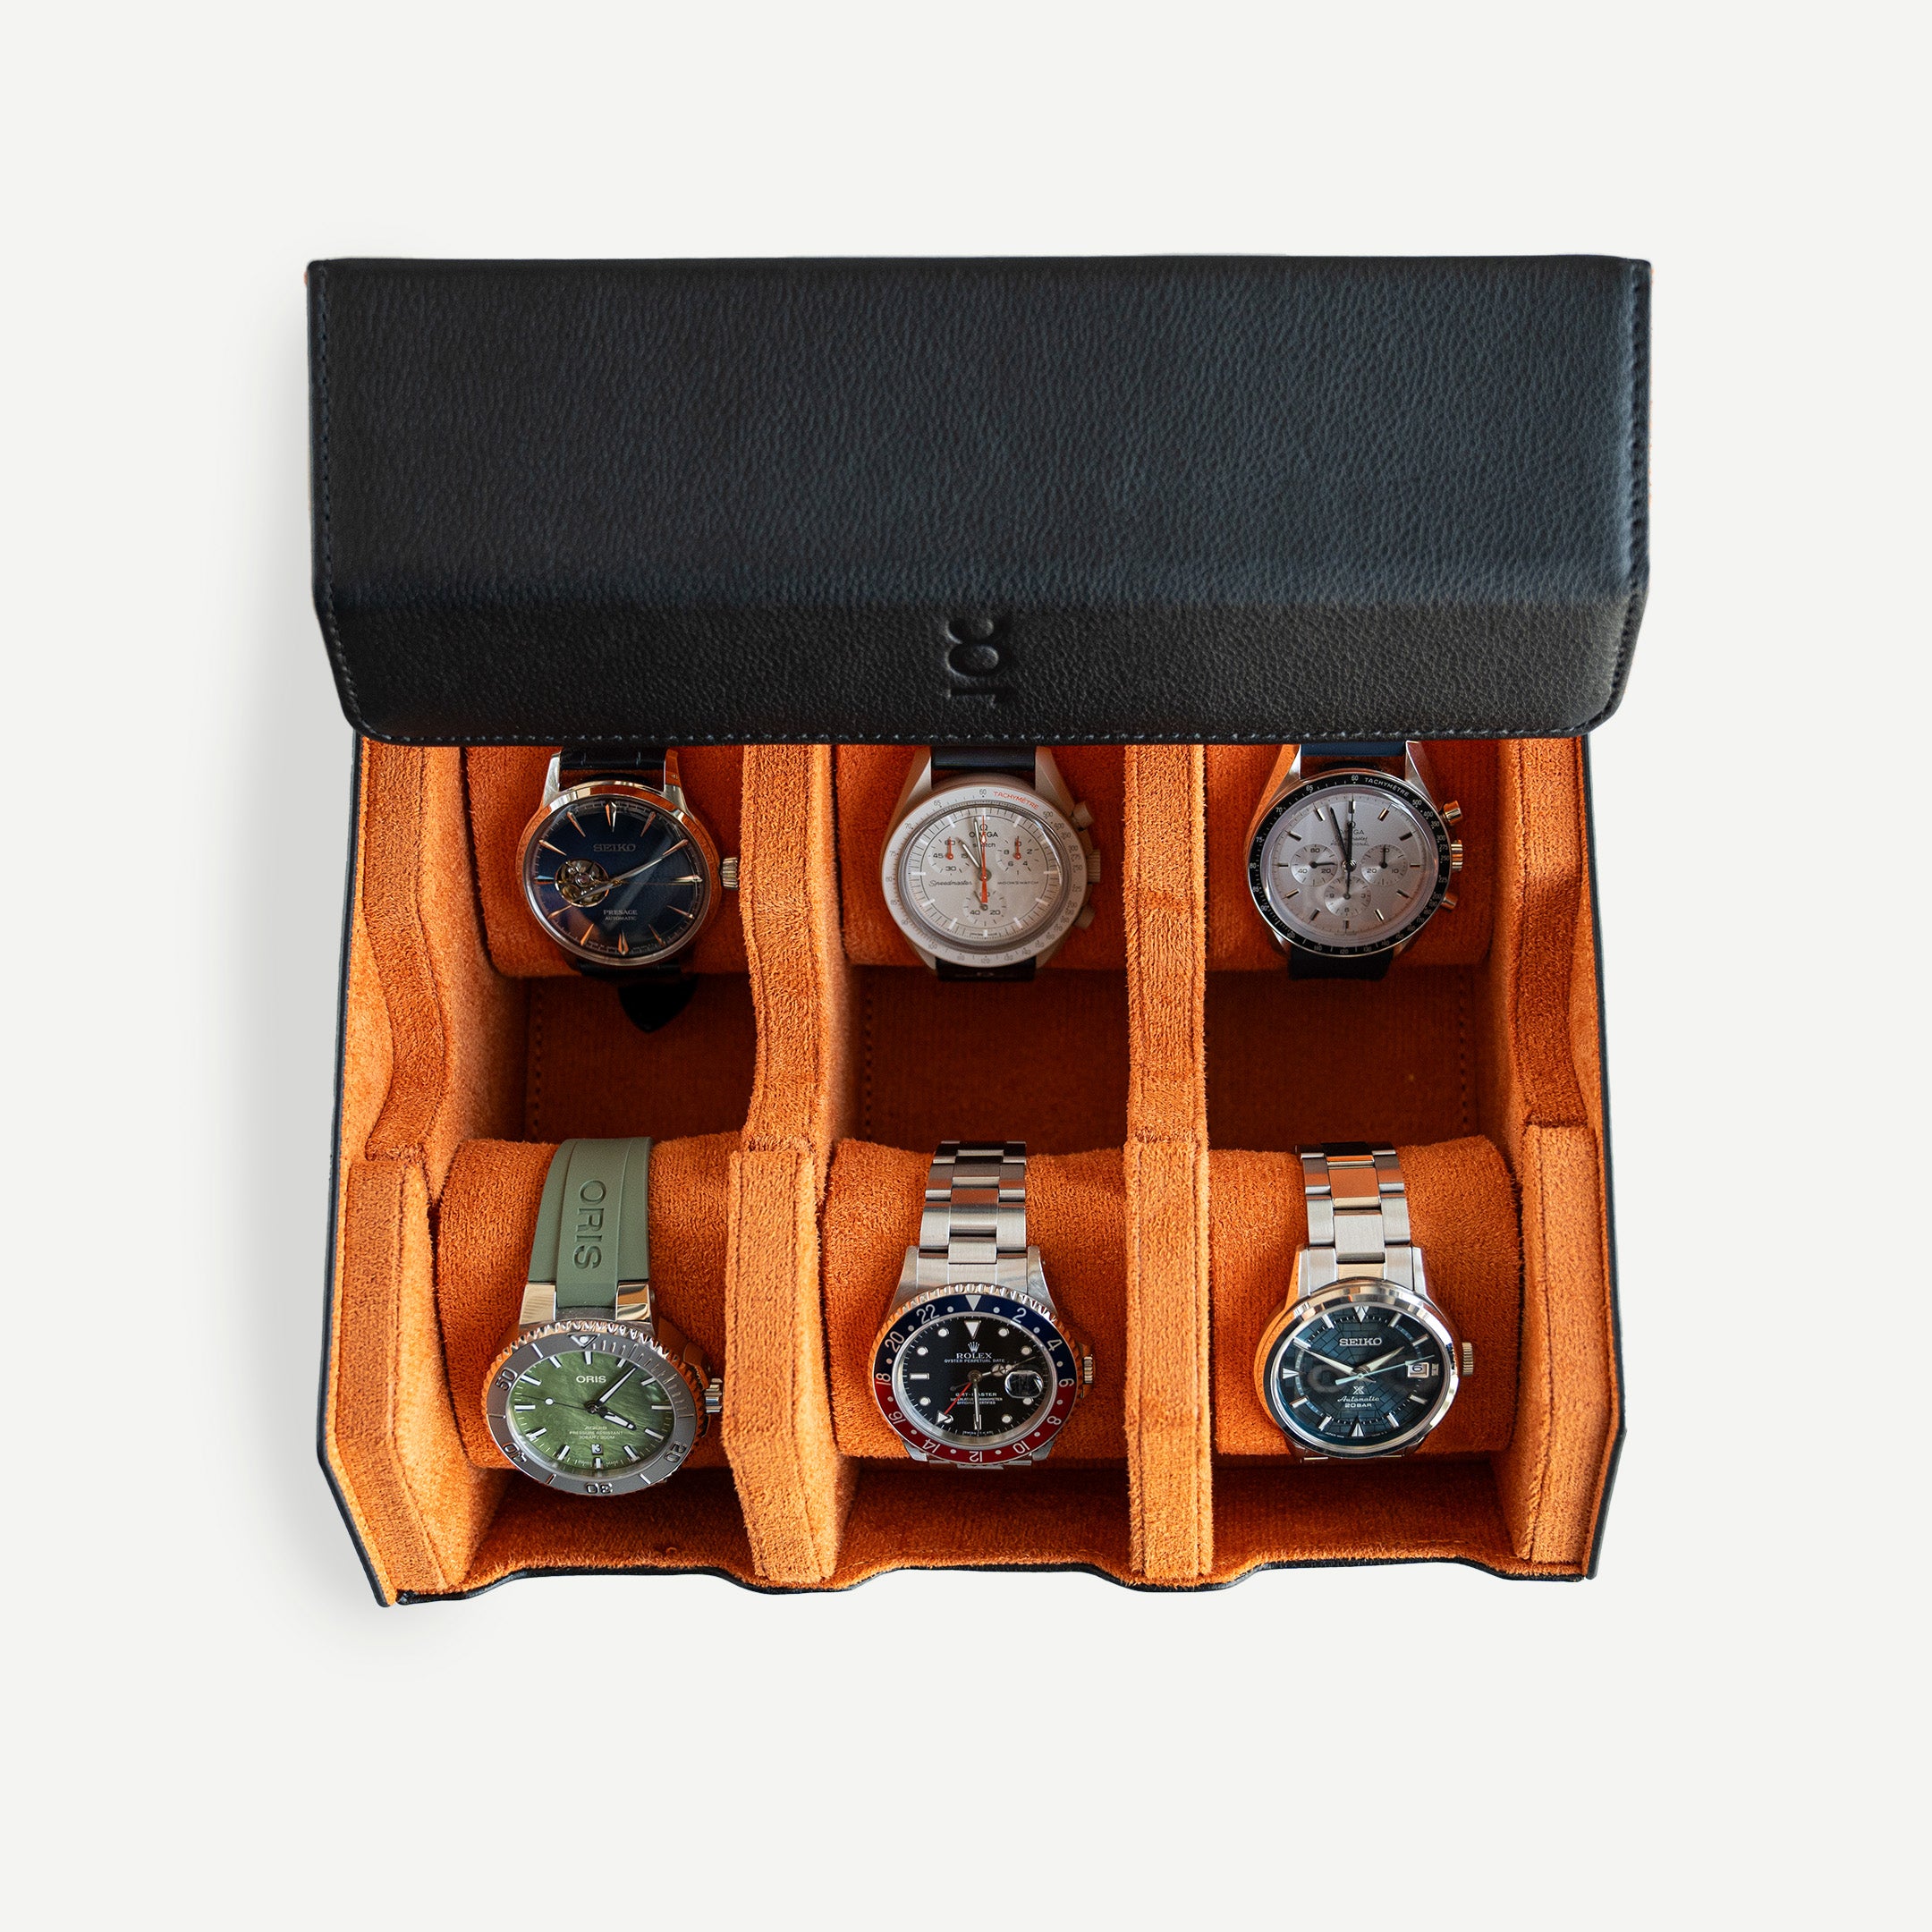 Hexagon Watch Box - Black Orange - 1.362 kr - Free shipping